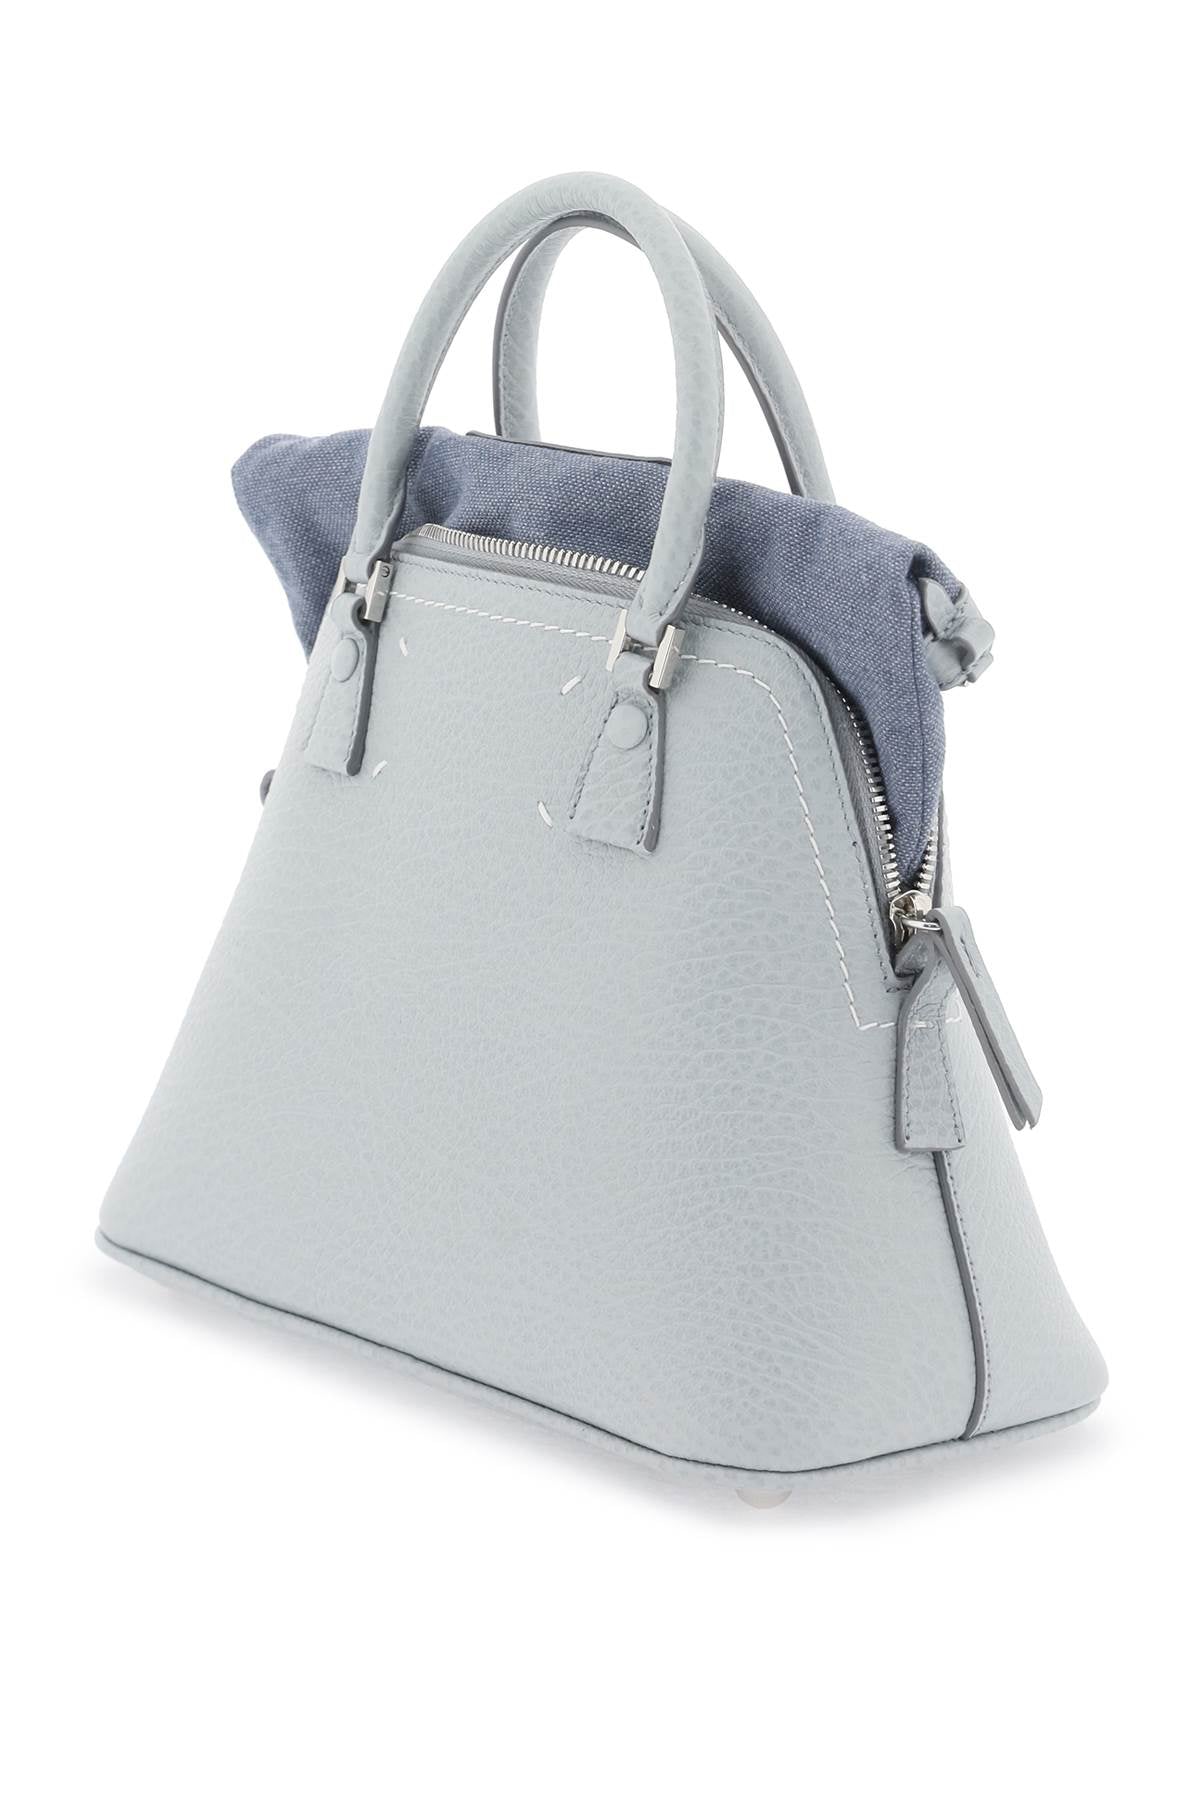 MAISON MARGIELA 5AC MINI Gray Leather Handbag with Unique Design and Unisex Appeal